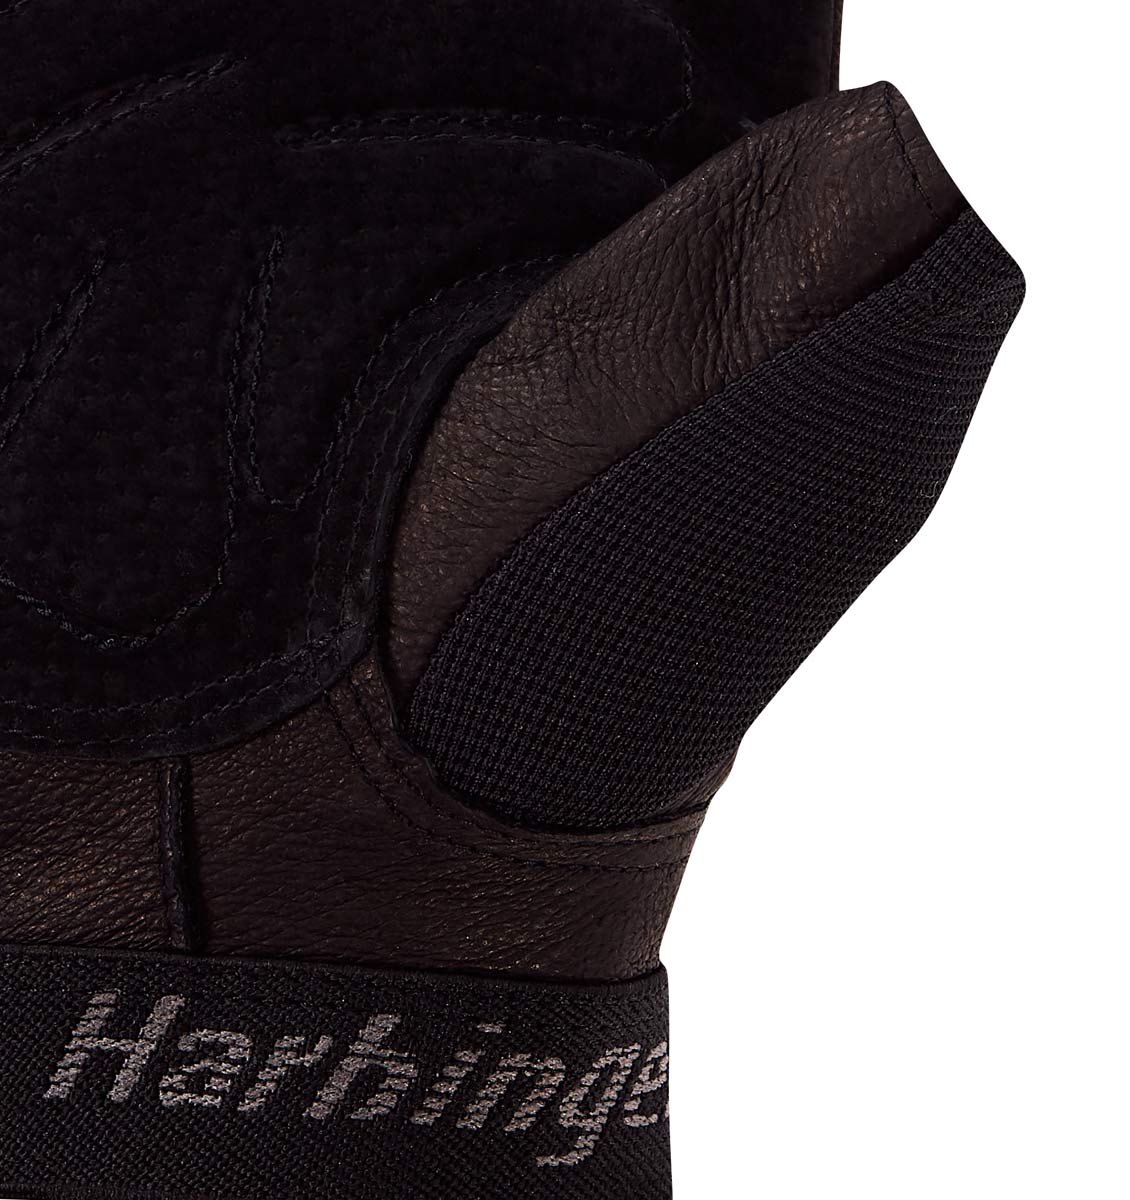 01260 Harbinger Training Grip Gym Gloves Palm Close Up